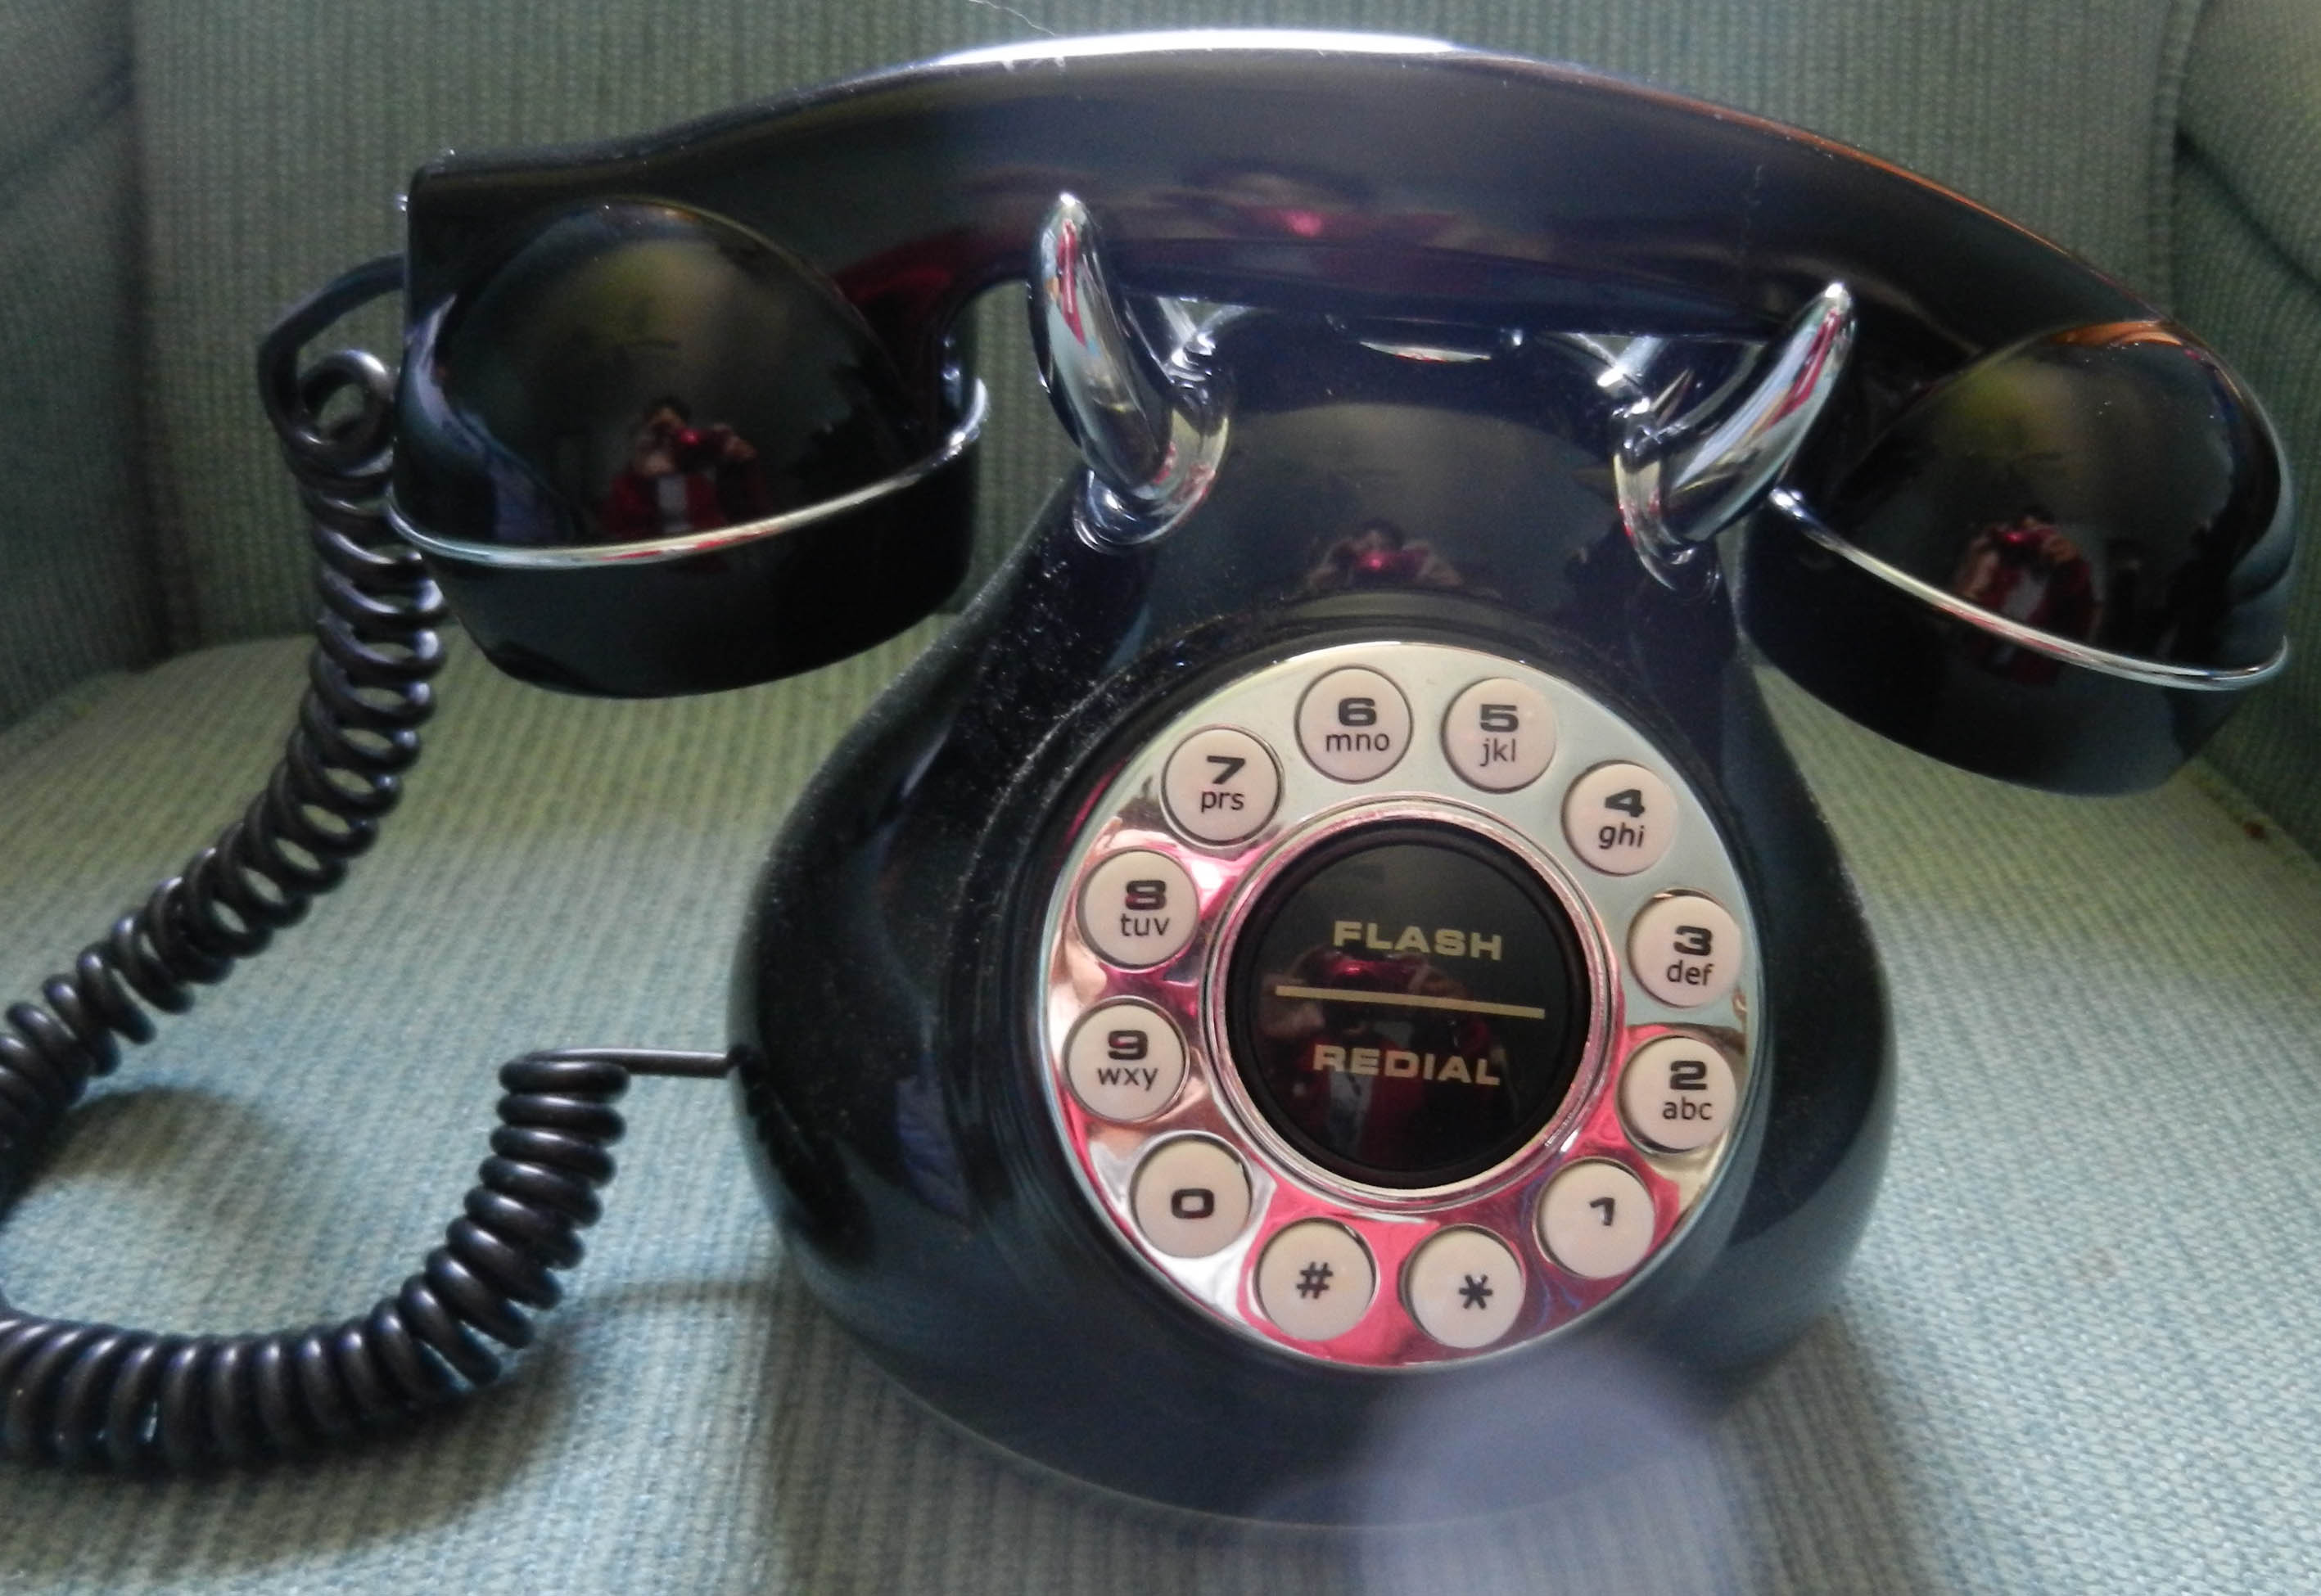 Rotary style phone